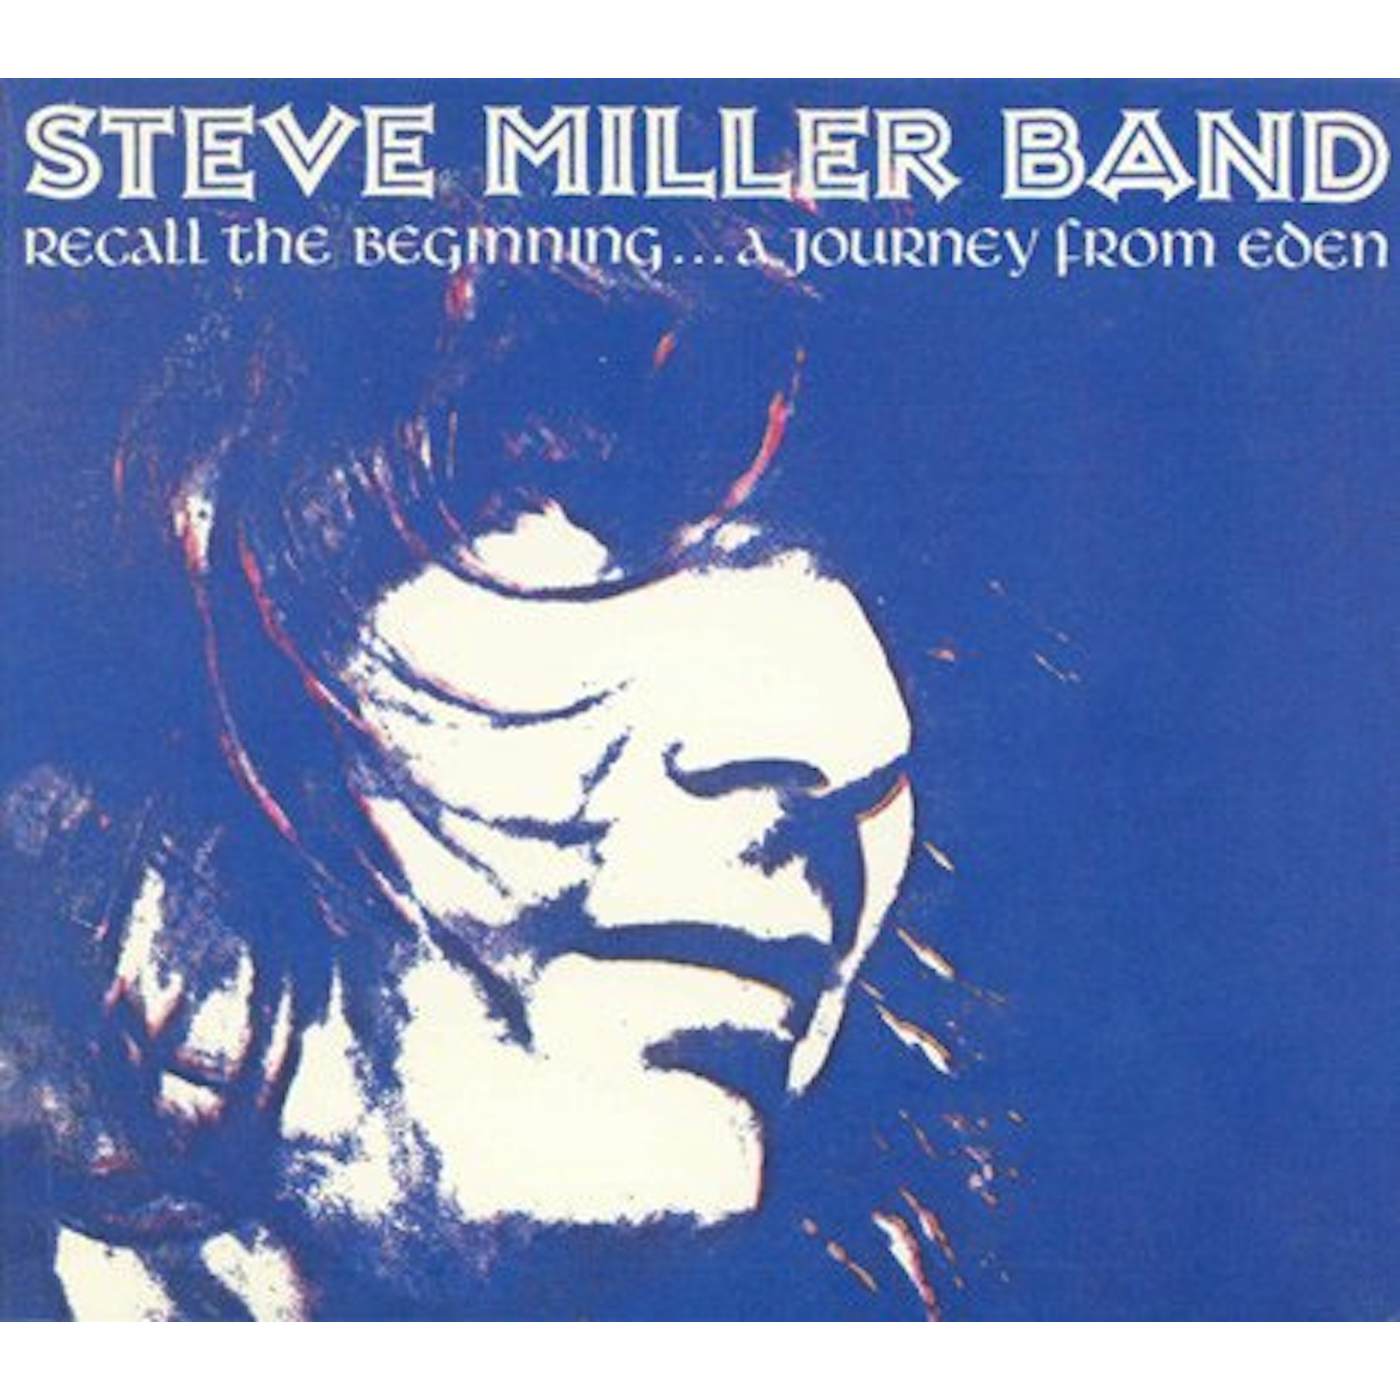 Steve Miller Band RECALL THE BEGINNING: A JOURNEY FROM EDEN Vinyl Record